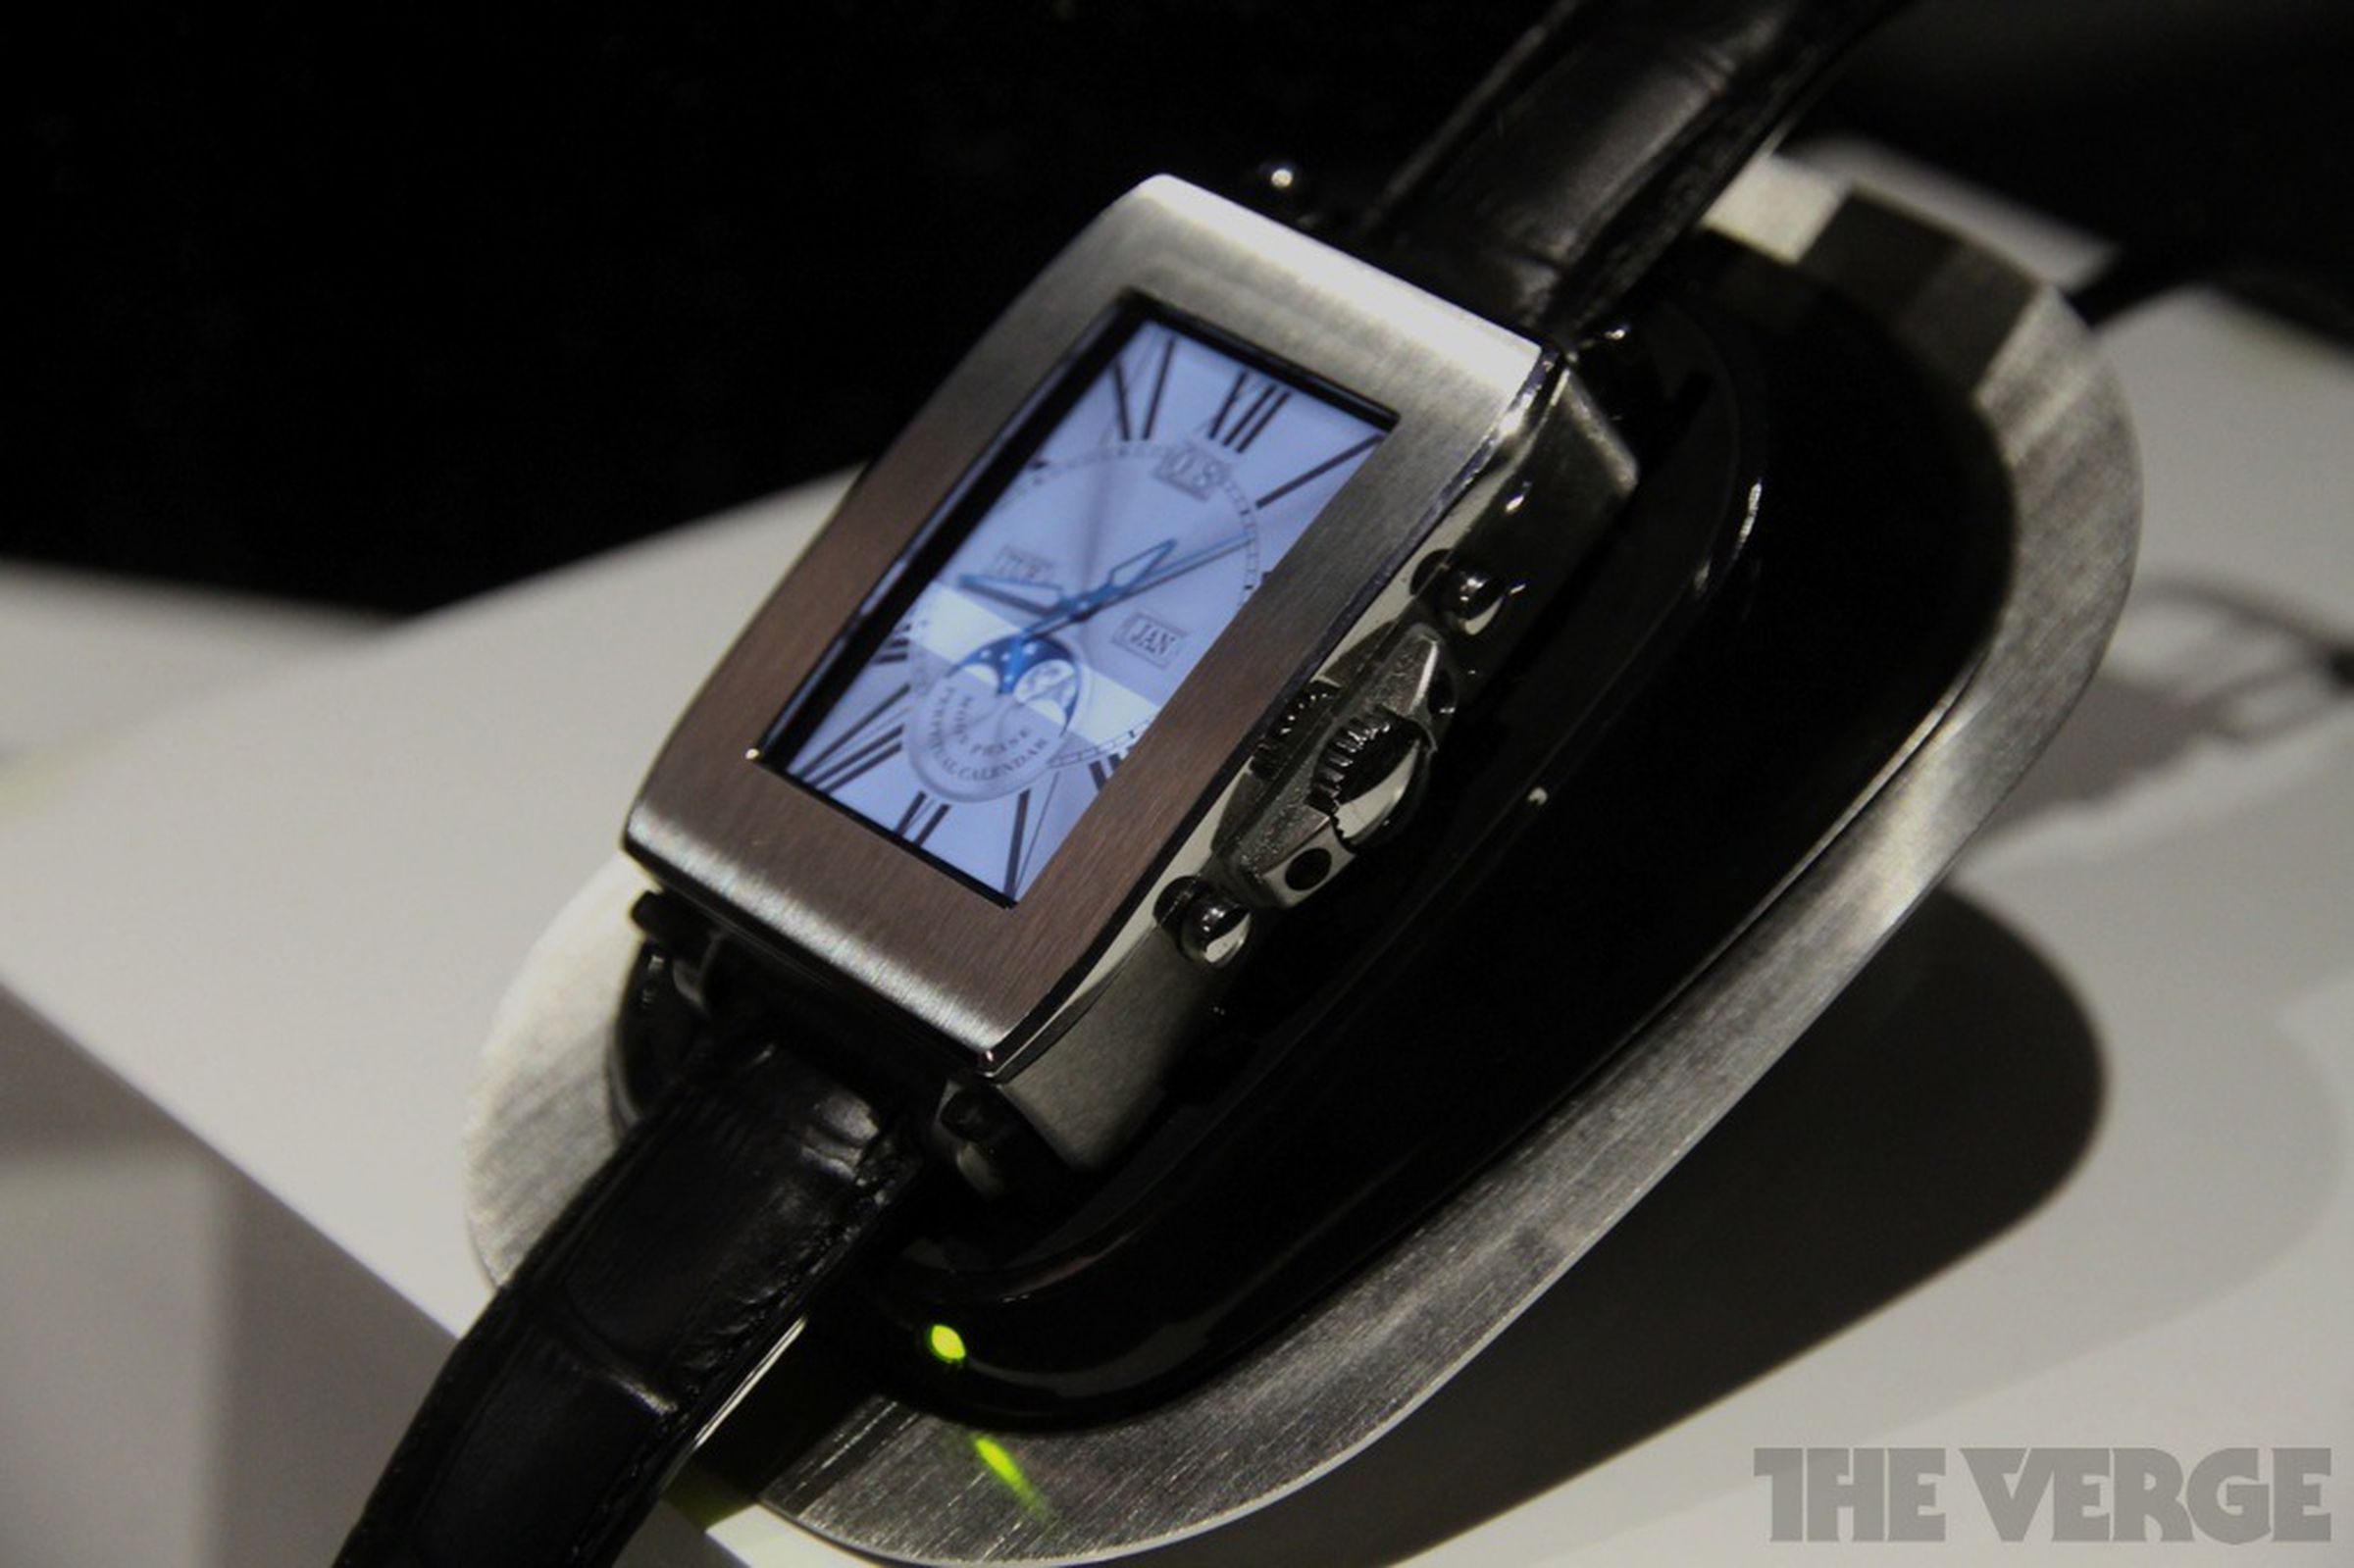 Toshiba smartwatch prototype hands-on photos